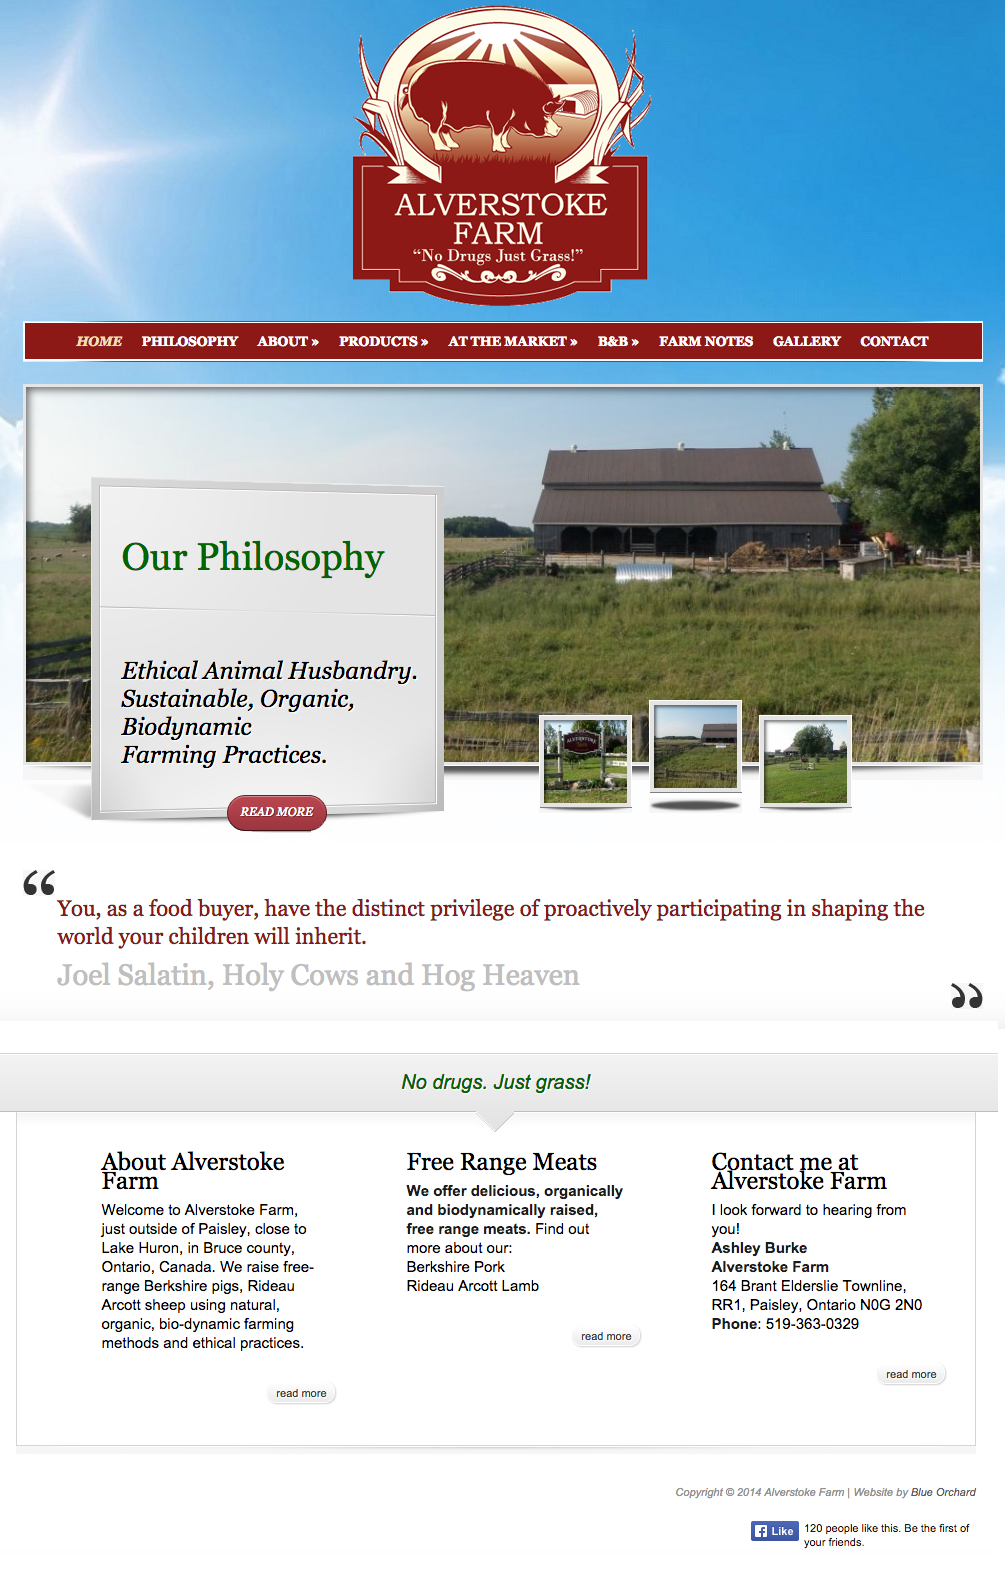 AlverstokeFarm.ca - Homepage - Full Screen View